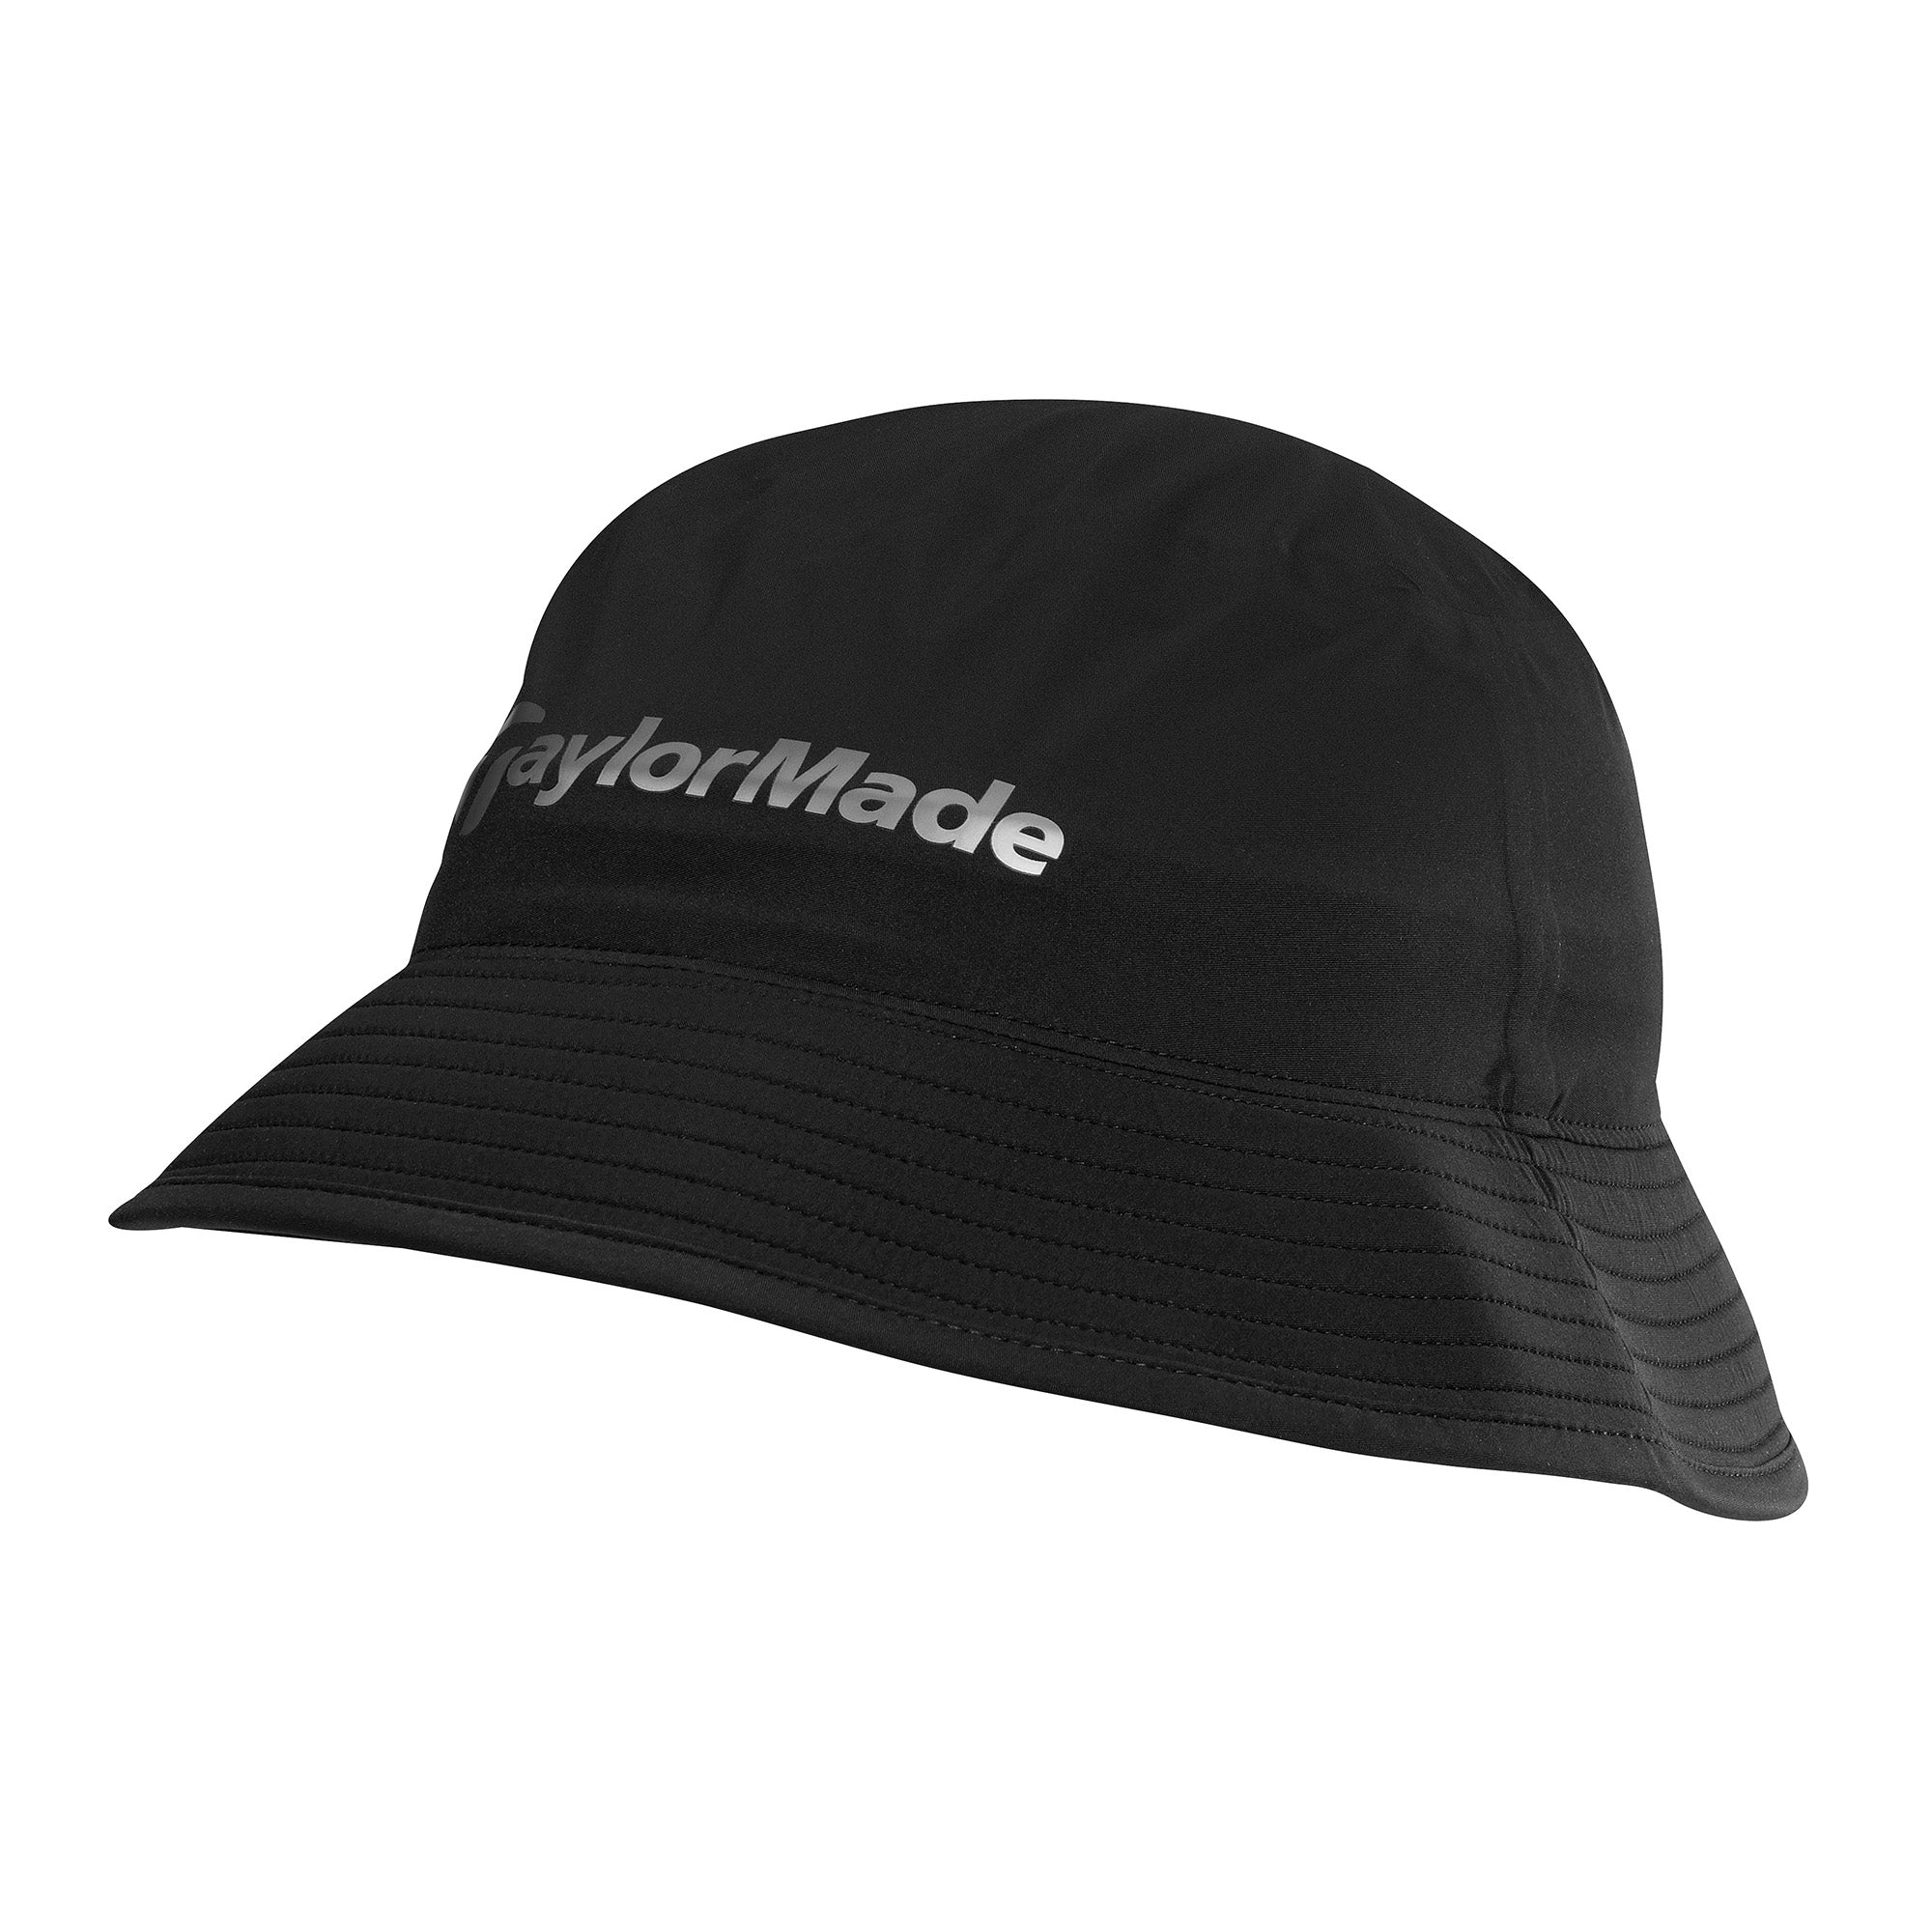 TaylorMade Golf Storm Bucket Hat